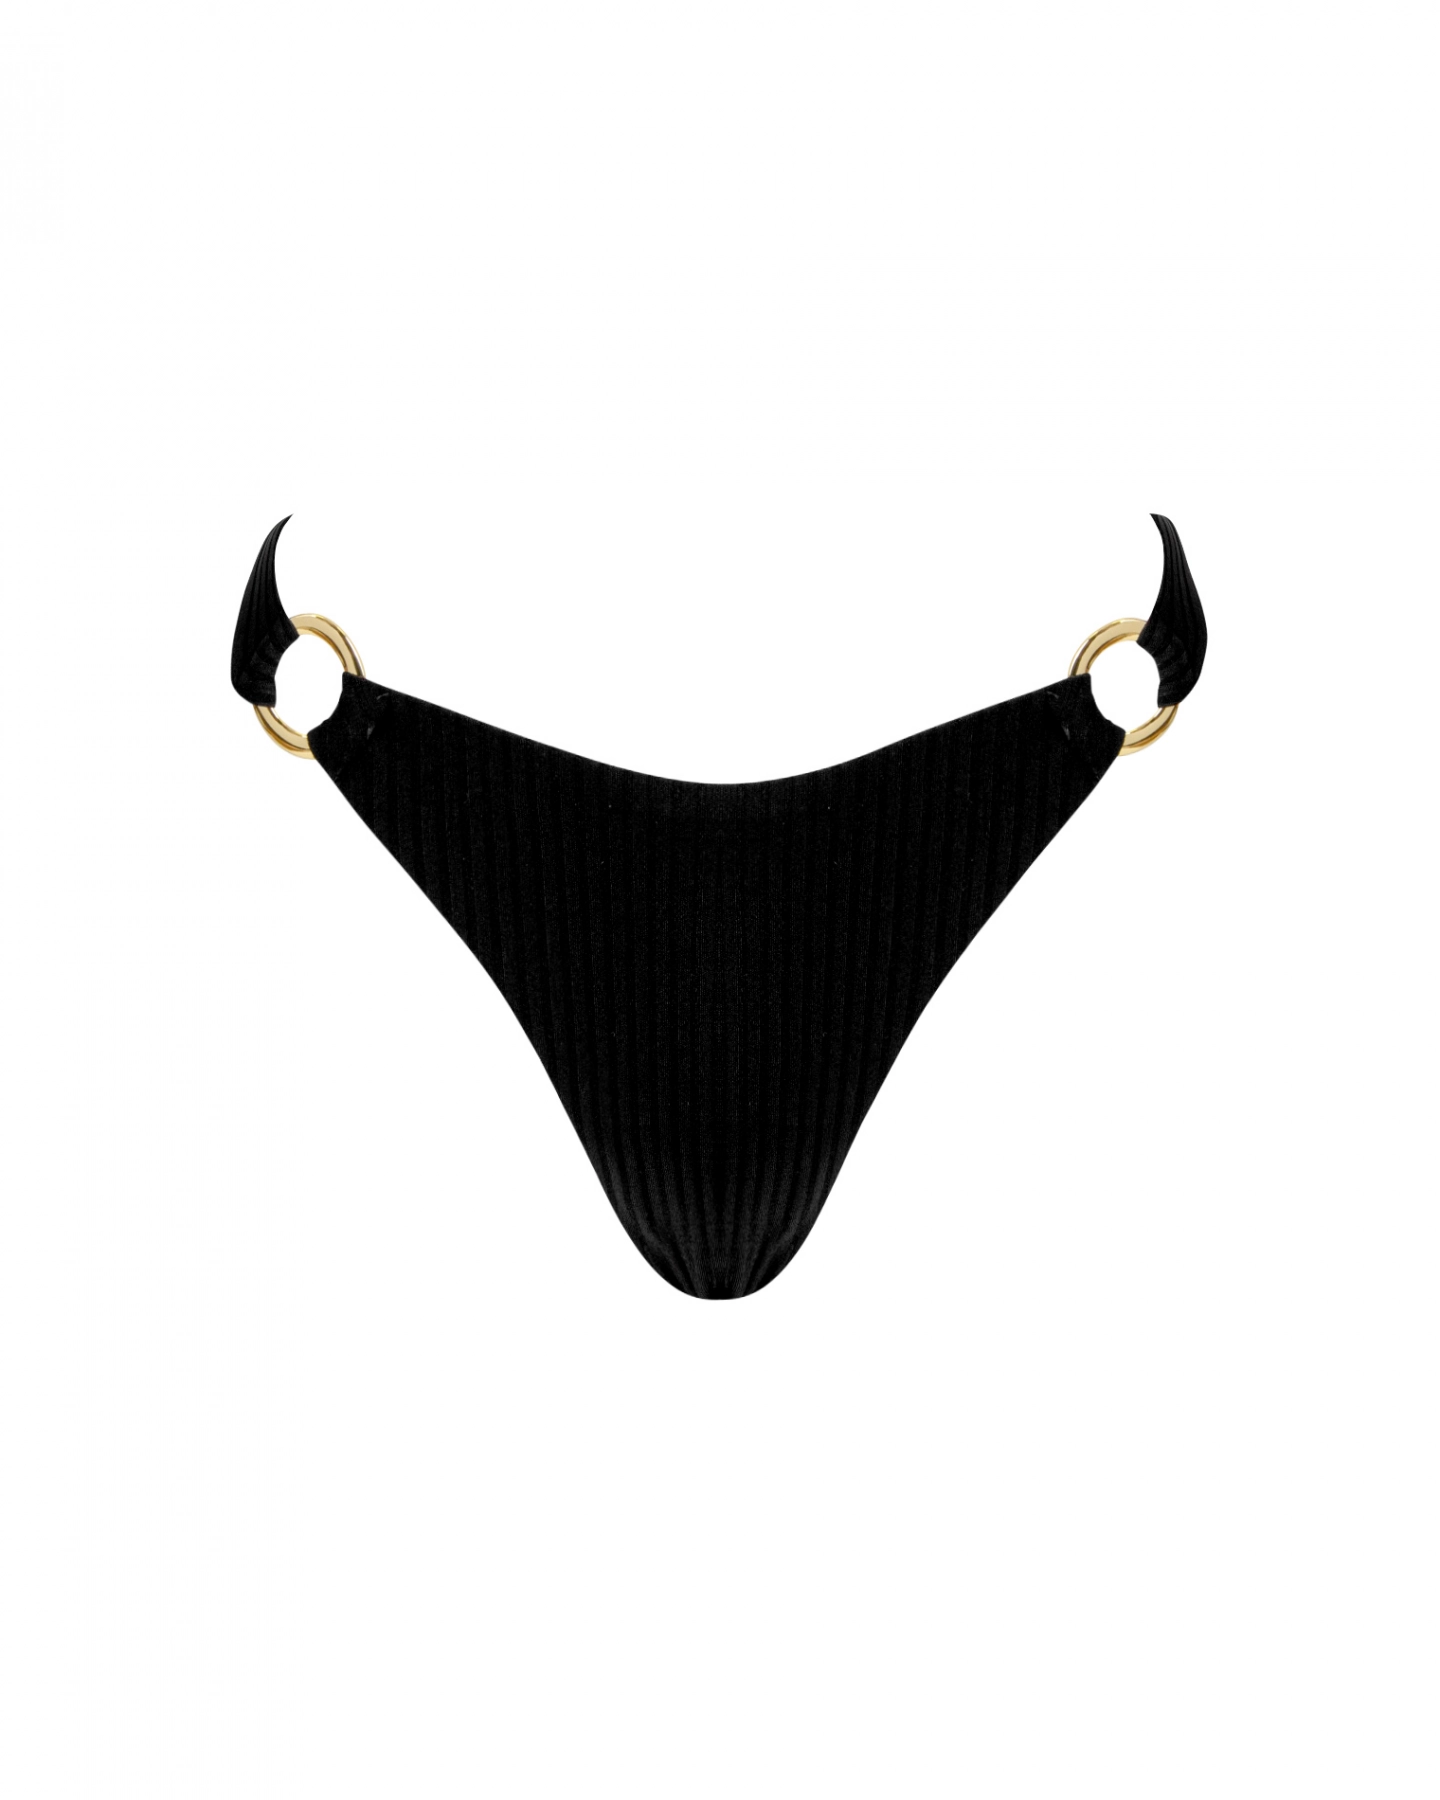 WHITE Side-tie ruched thong low-rise bikini bottom - S - VivienVance